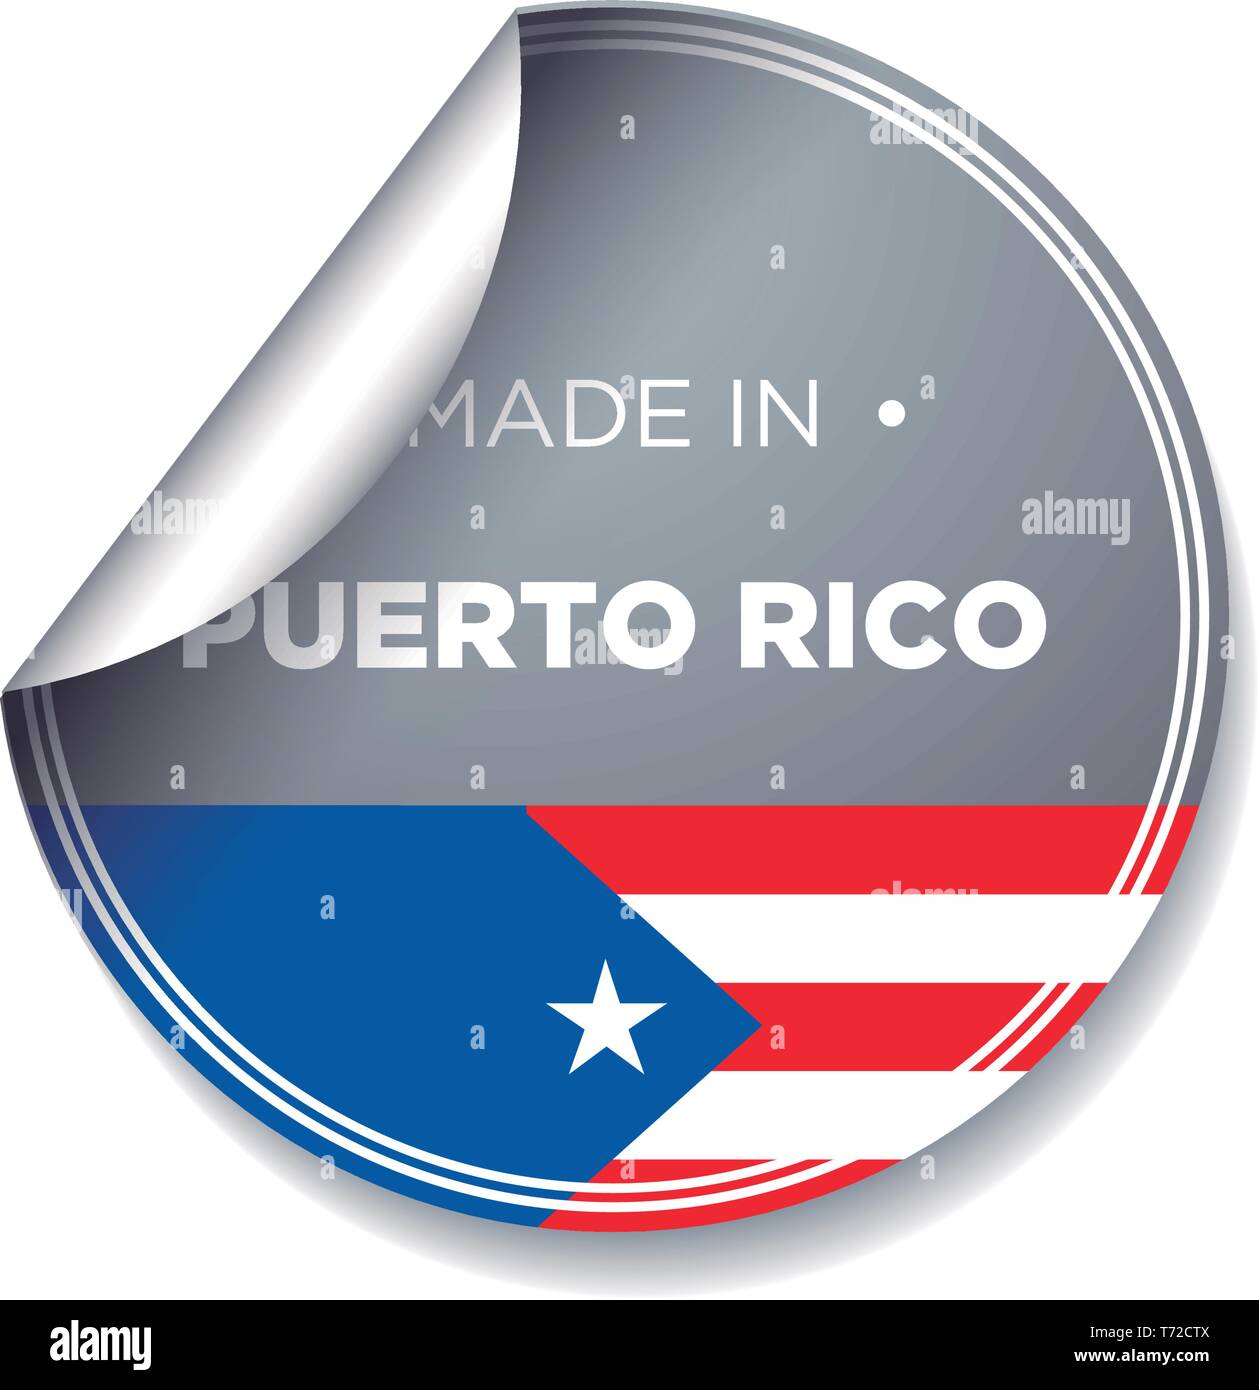 Hergestellt IN PUERTO RICO Stock Vektor